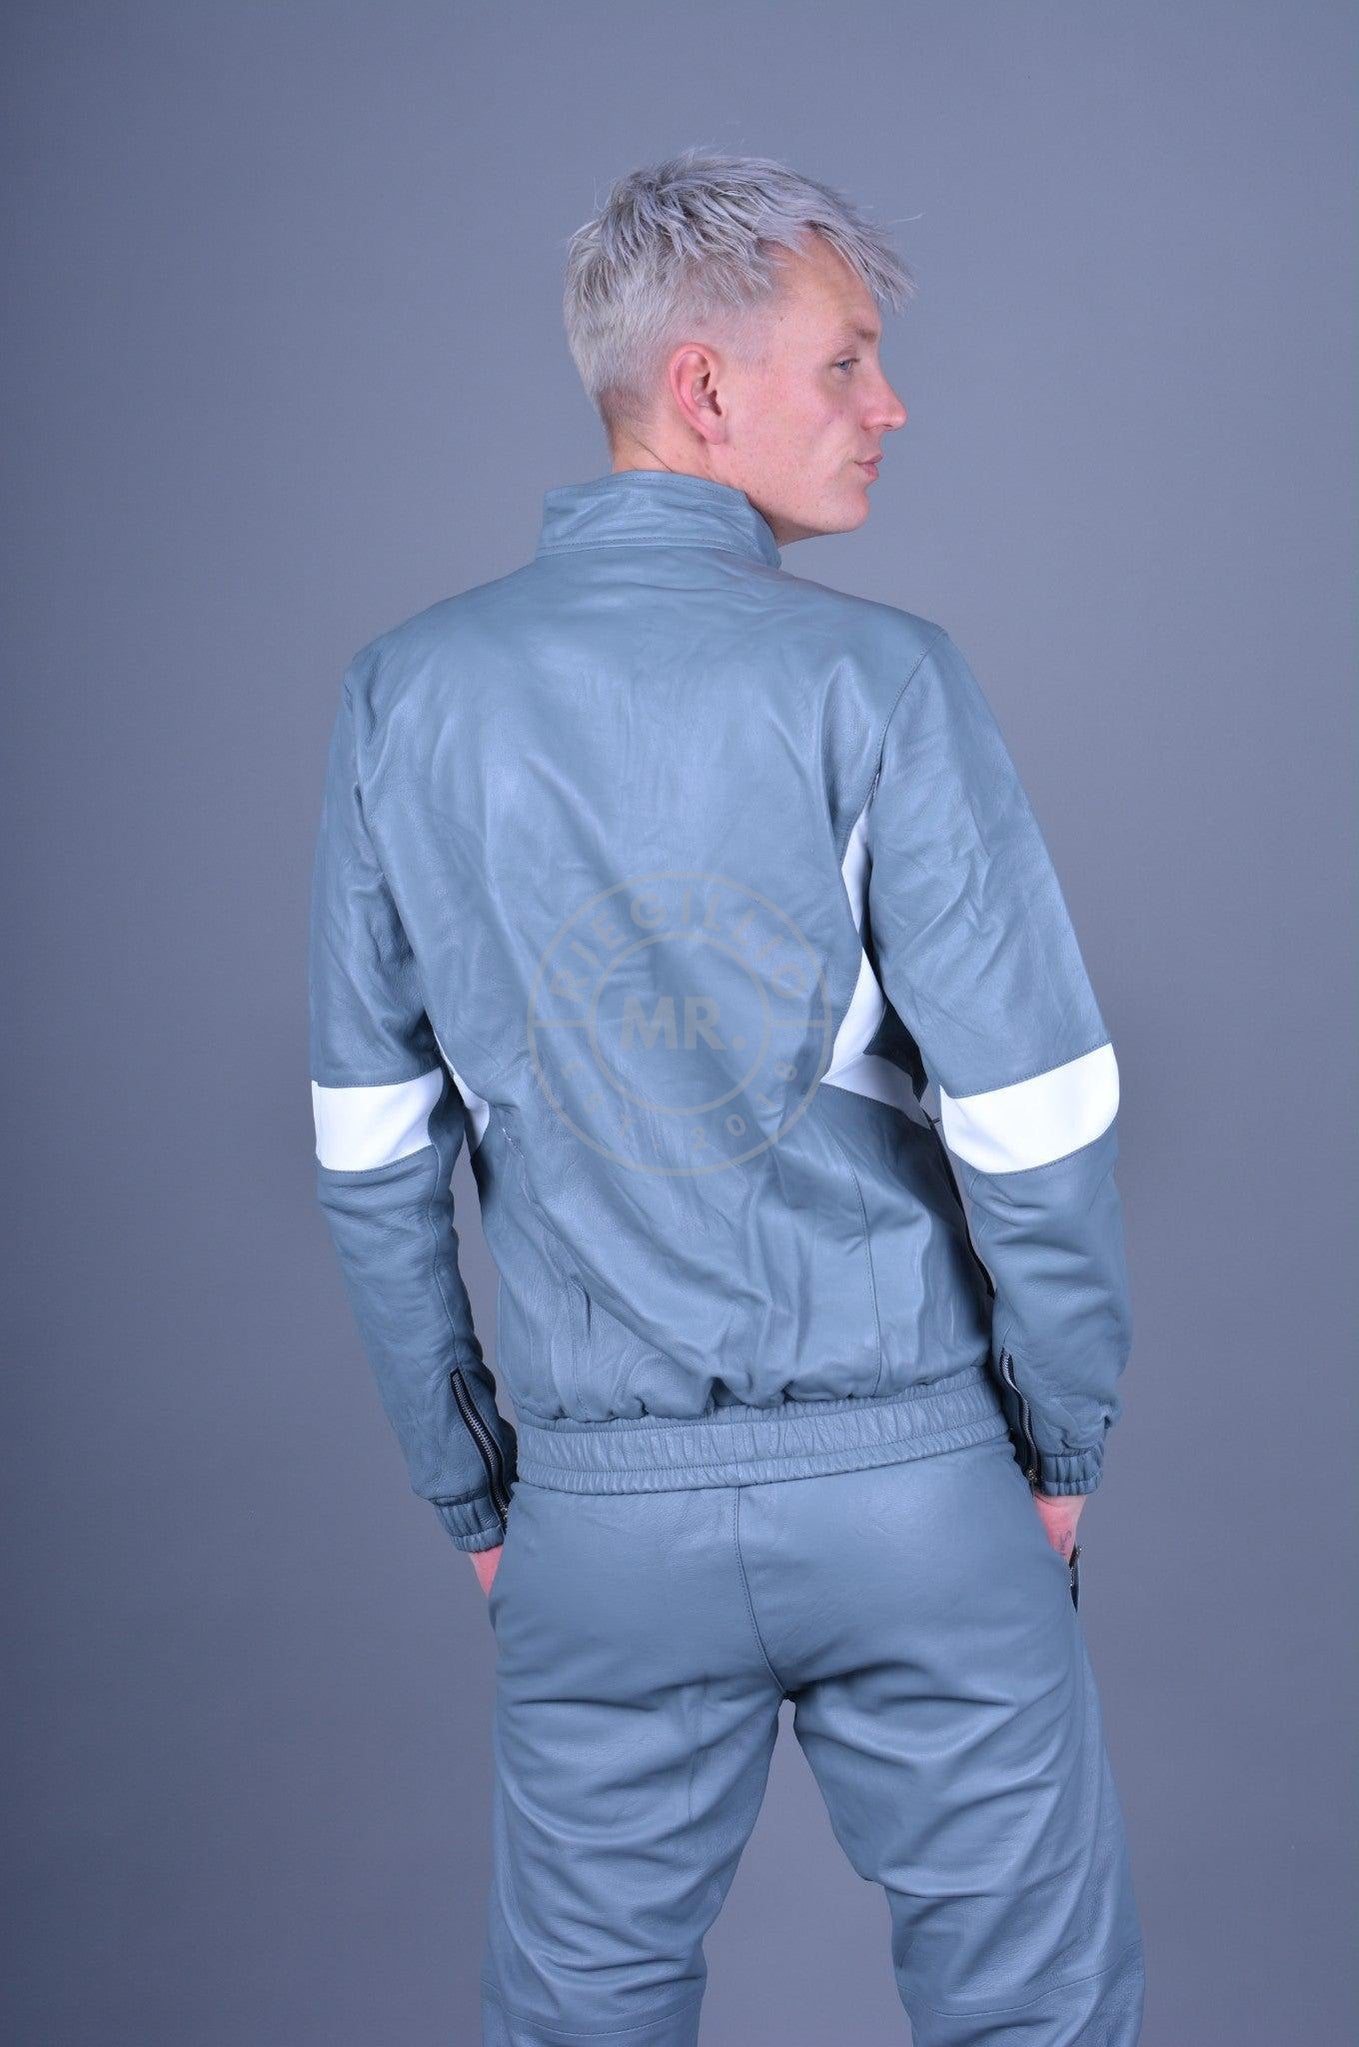 Slate Grey Leather Tracksuit Jacket at MR. Riegillio